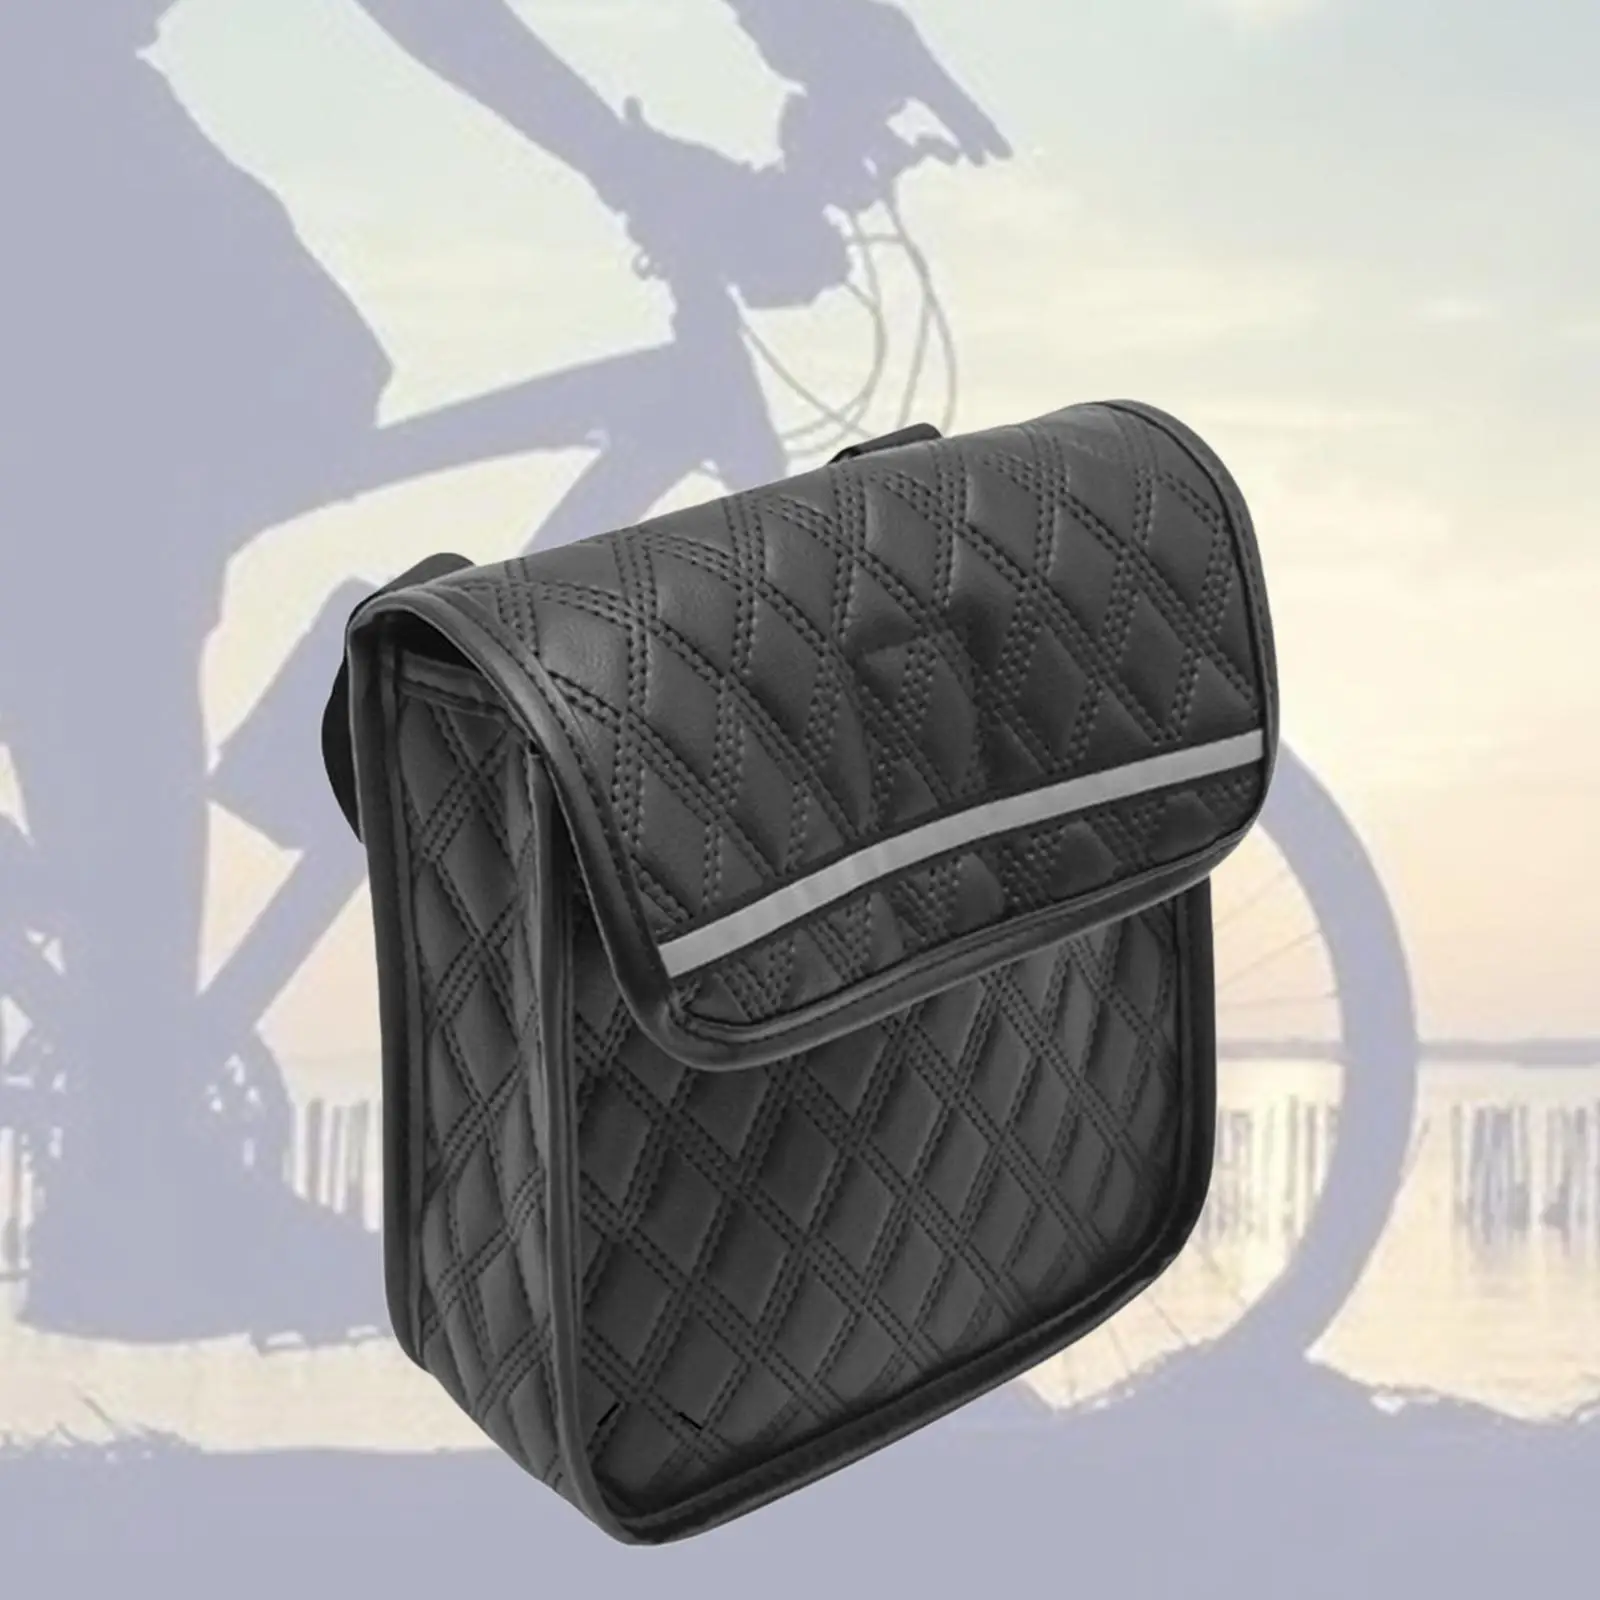 PU Leather Bike Handlebar Bag Front Pocket Organizer Storage Pouch Phone Holder Bag for Road Bike Mountain Bike Accessories